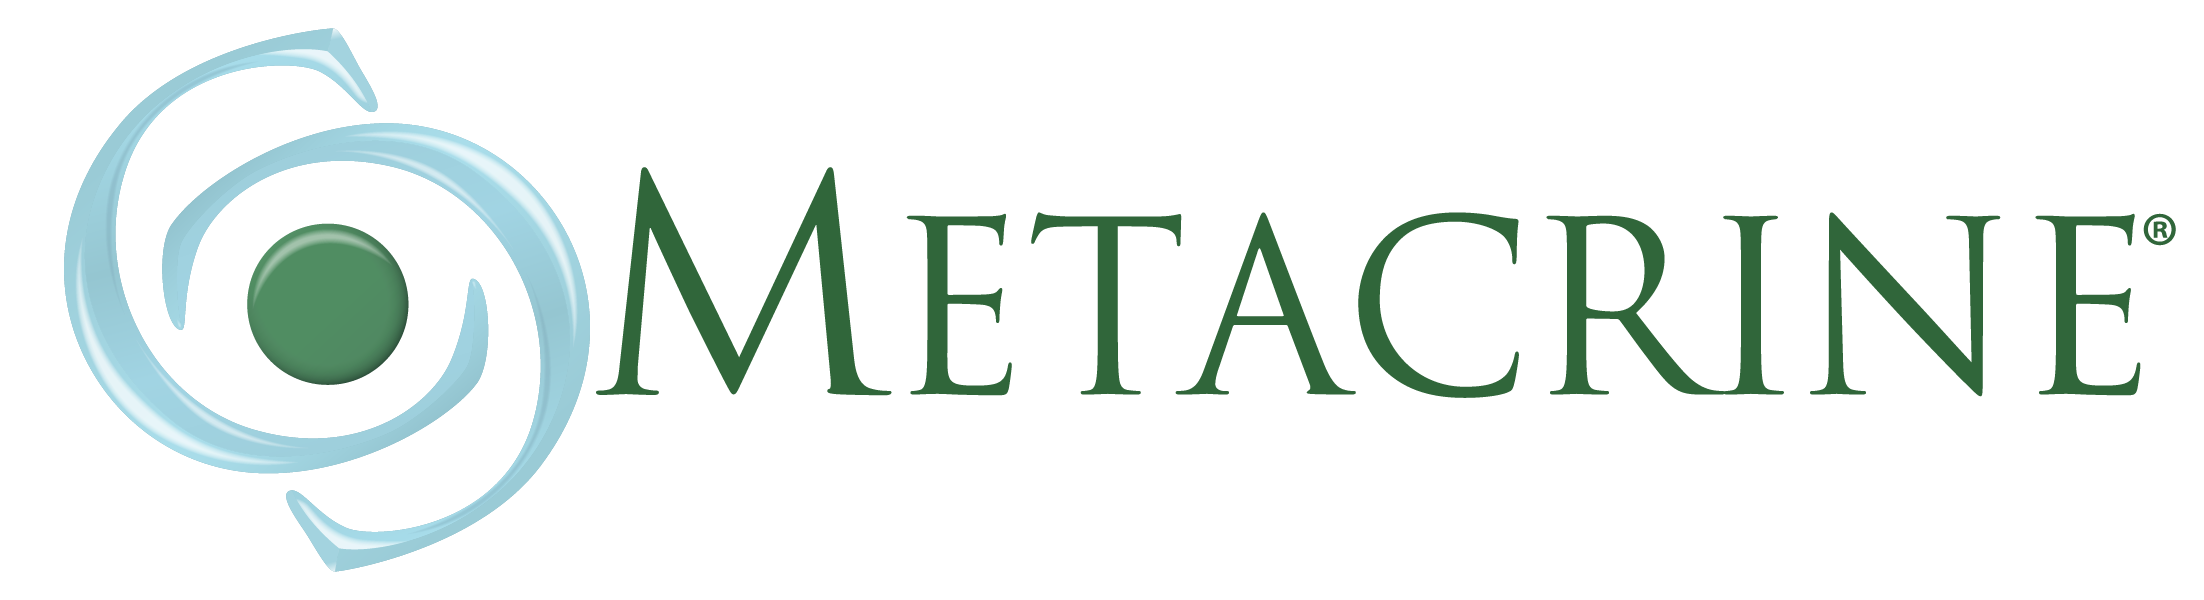 Metacrine-Logo-R Transparent.png.png